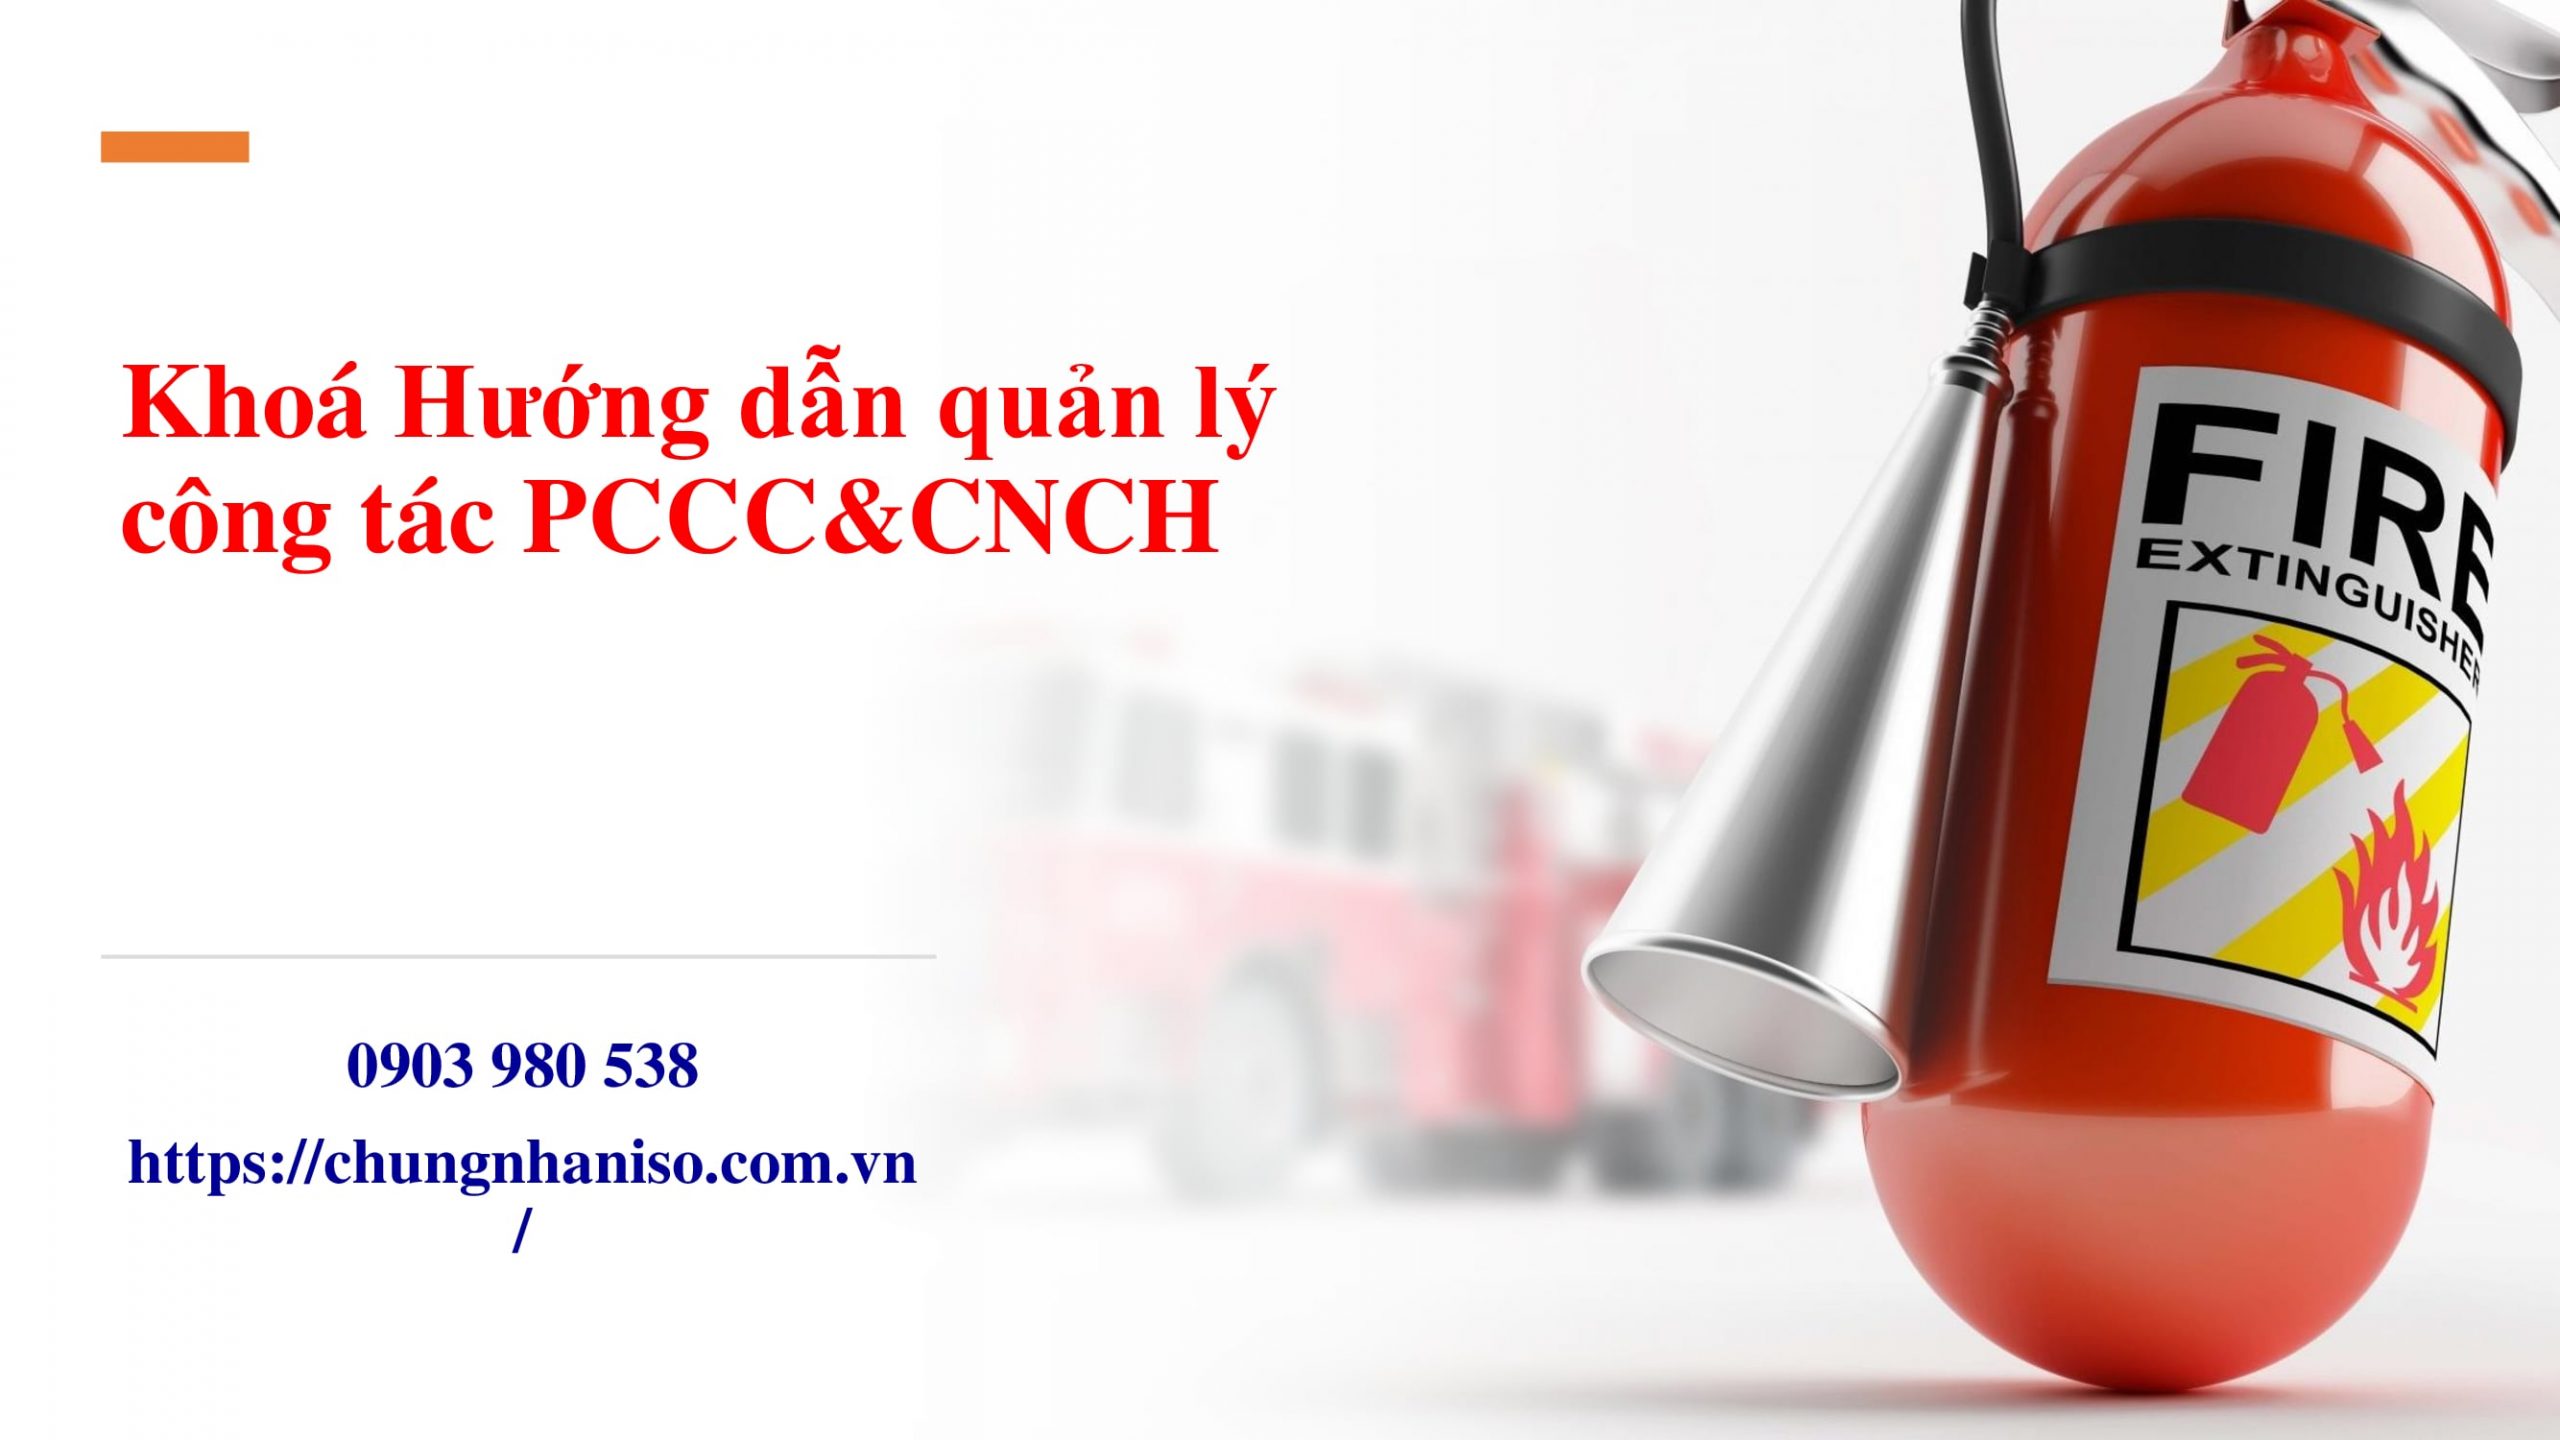 Khoa Huong dan quan ly cong tac PCCC CNCH scaled